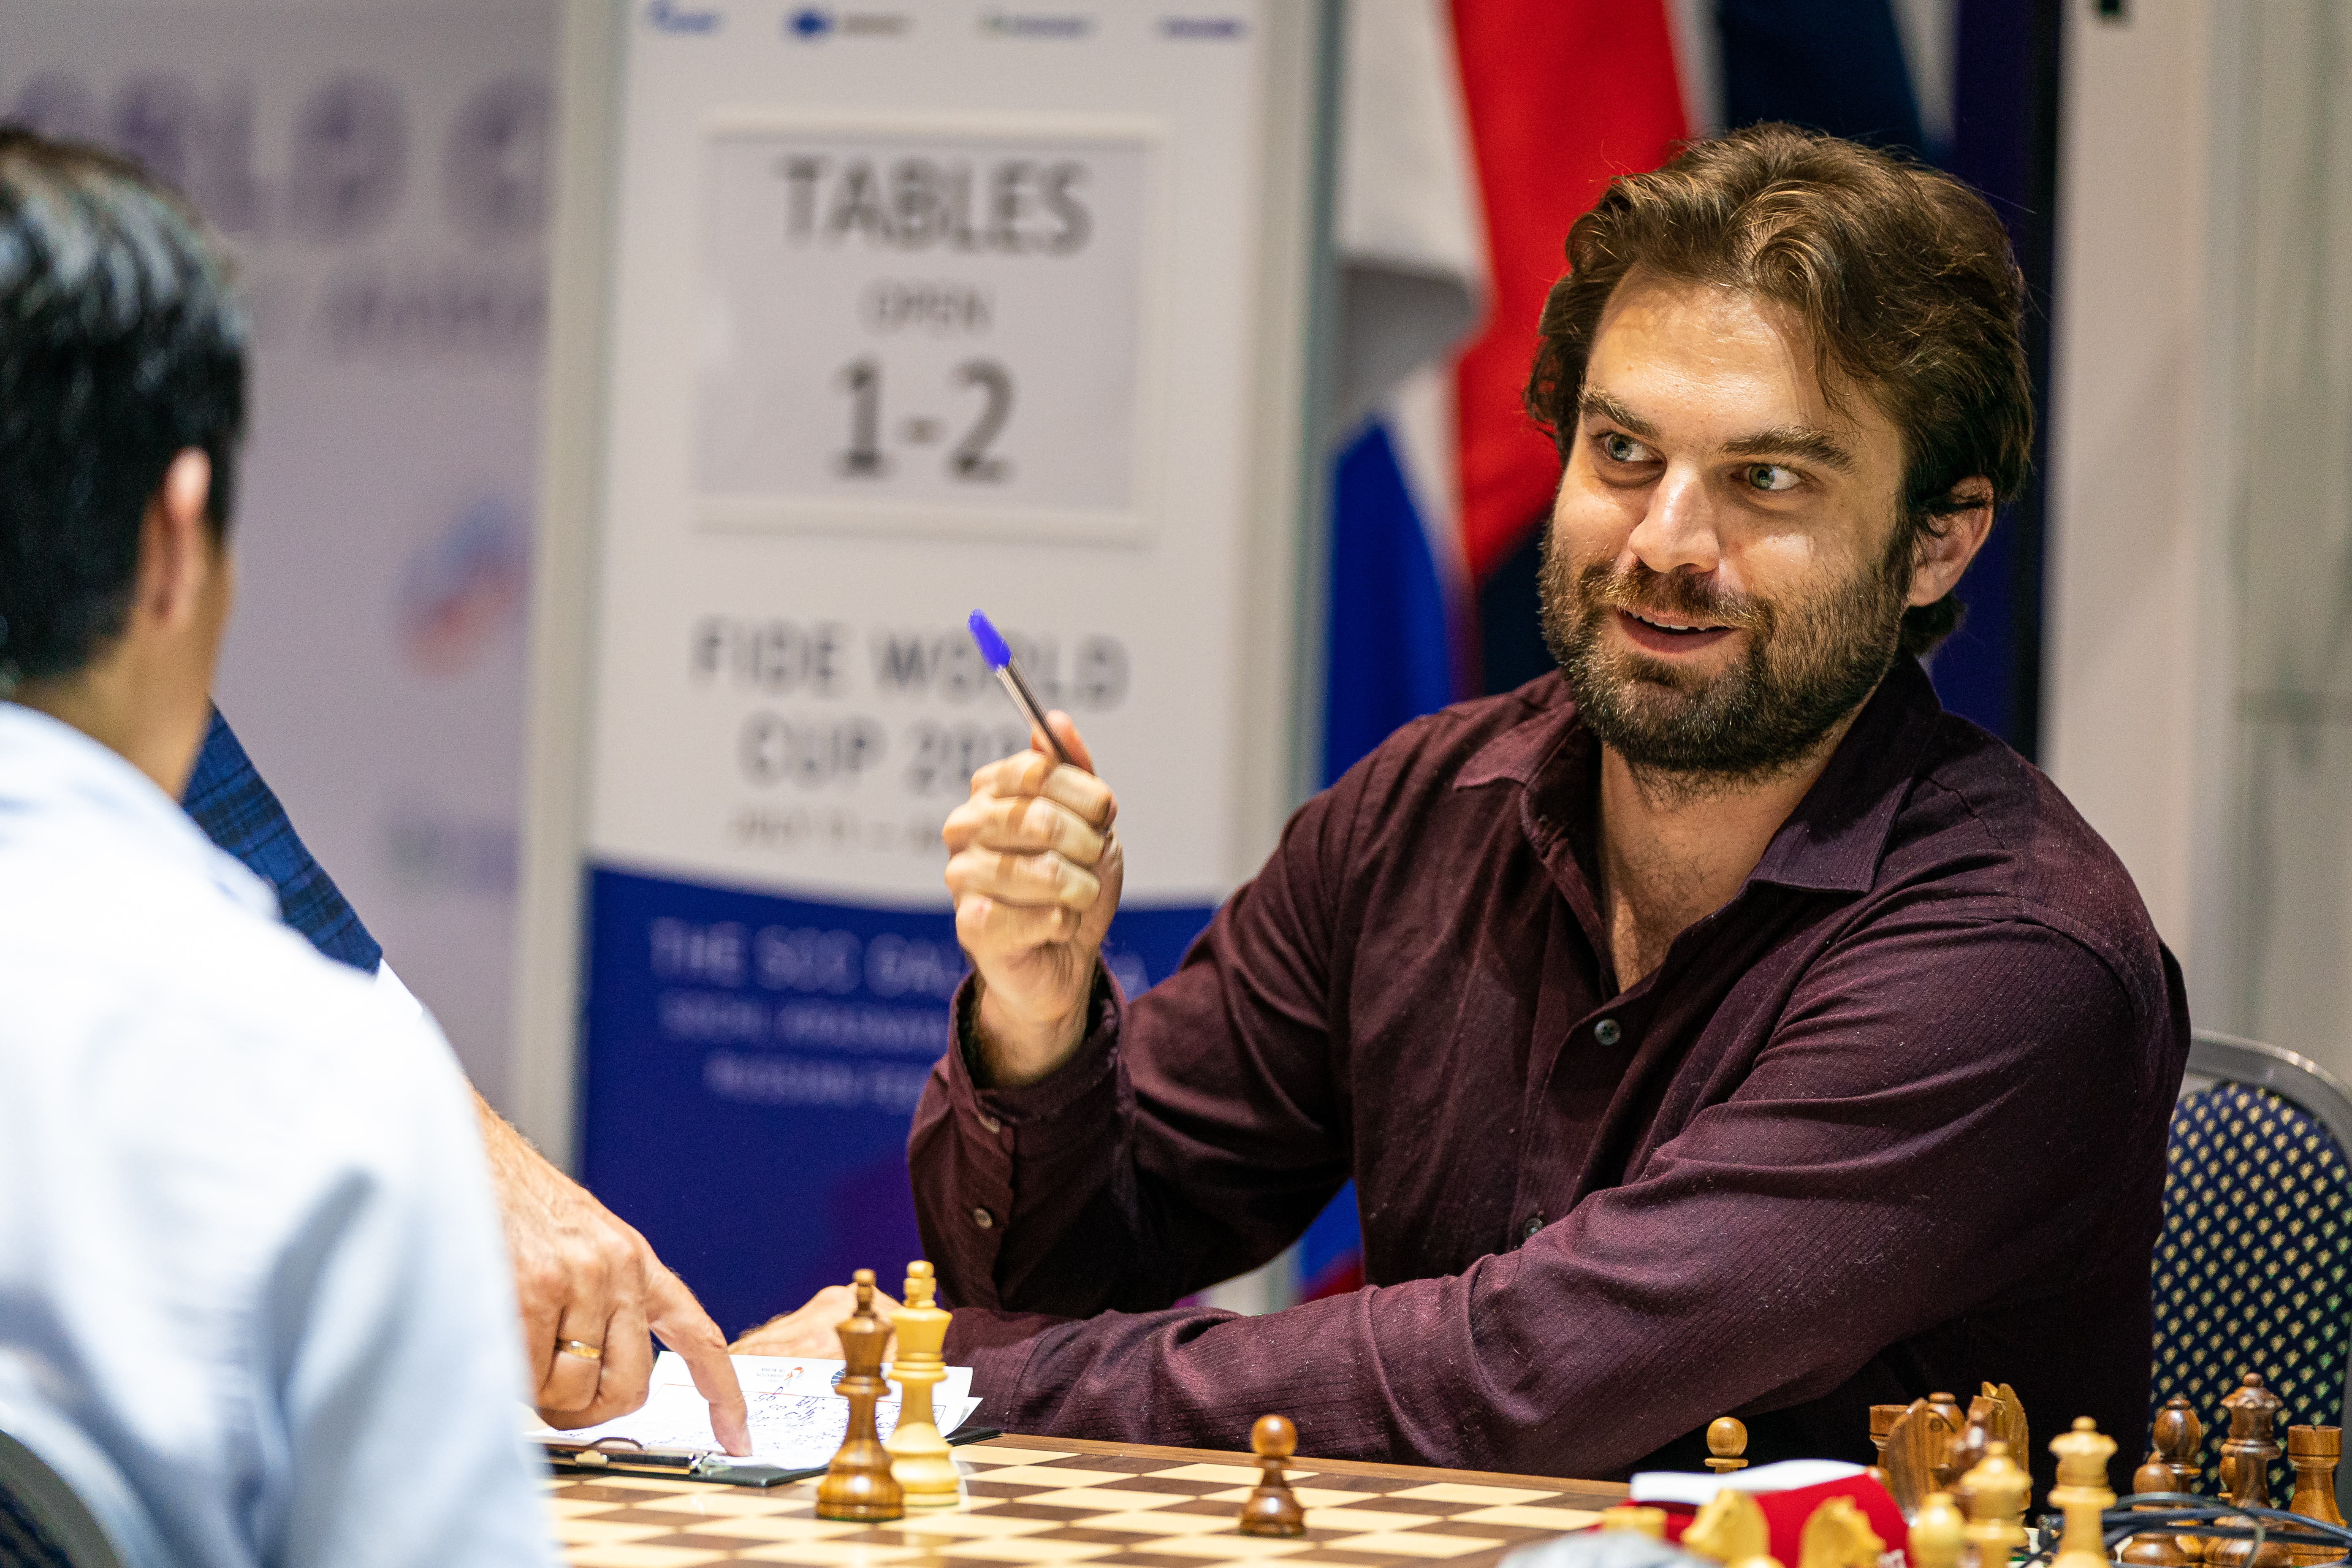 FIDE World Cup 2017: World No.35 eliminates World No.1